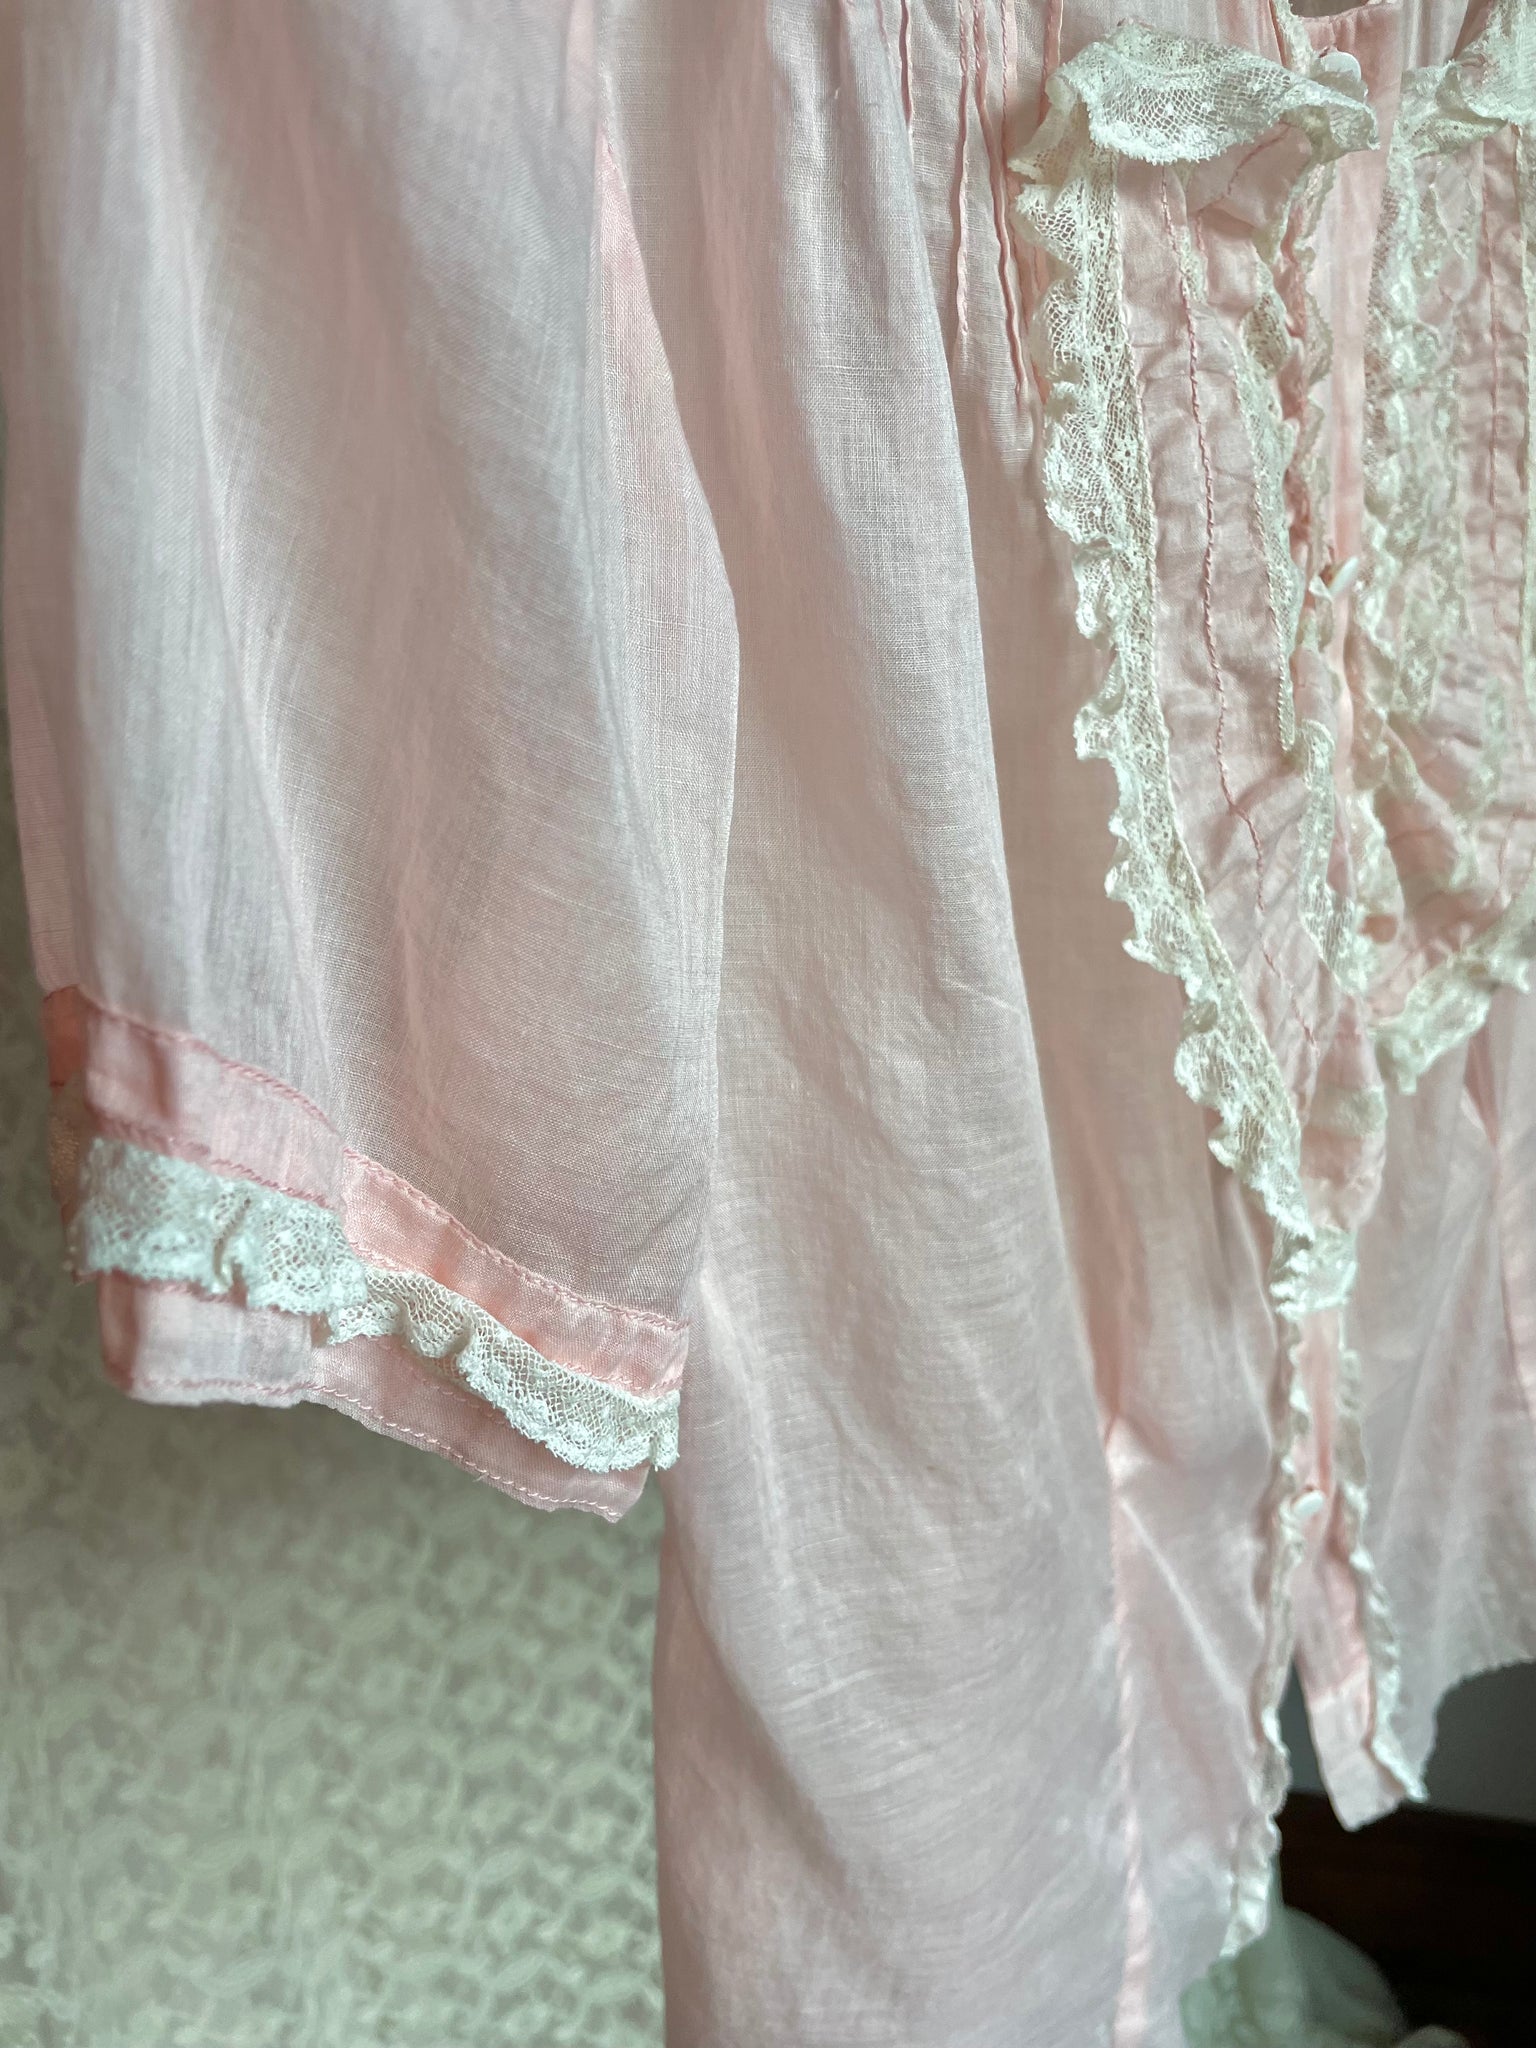 1940s Light Pink White Lace Ruffle Cotton Blouse